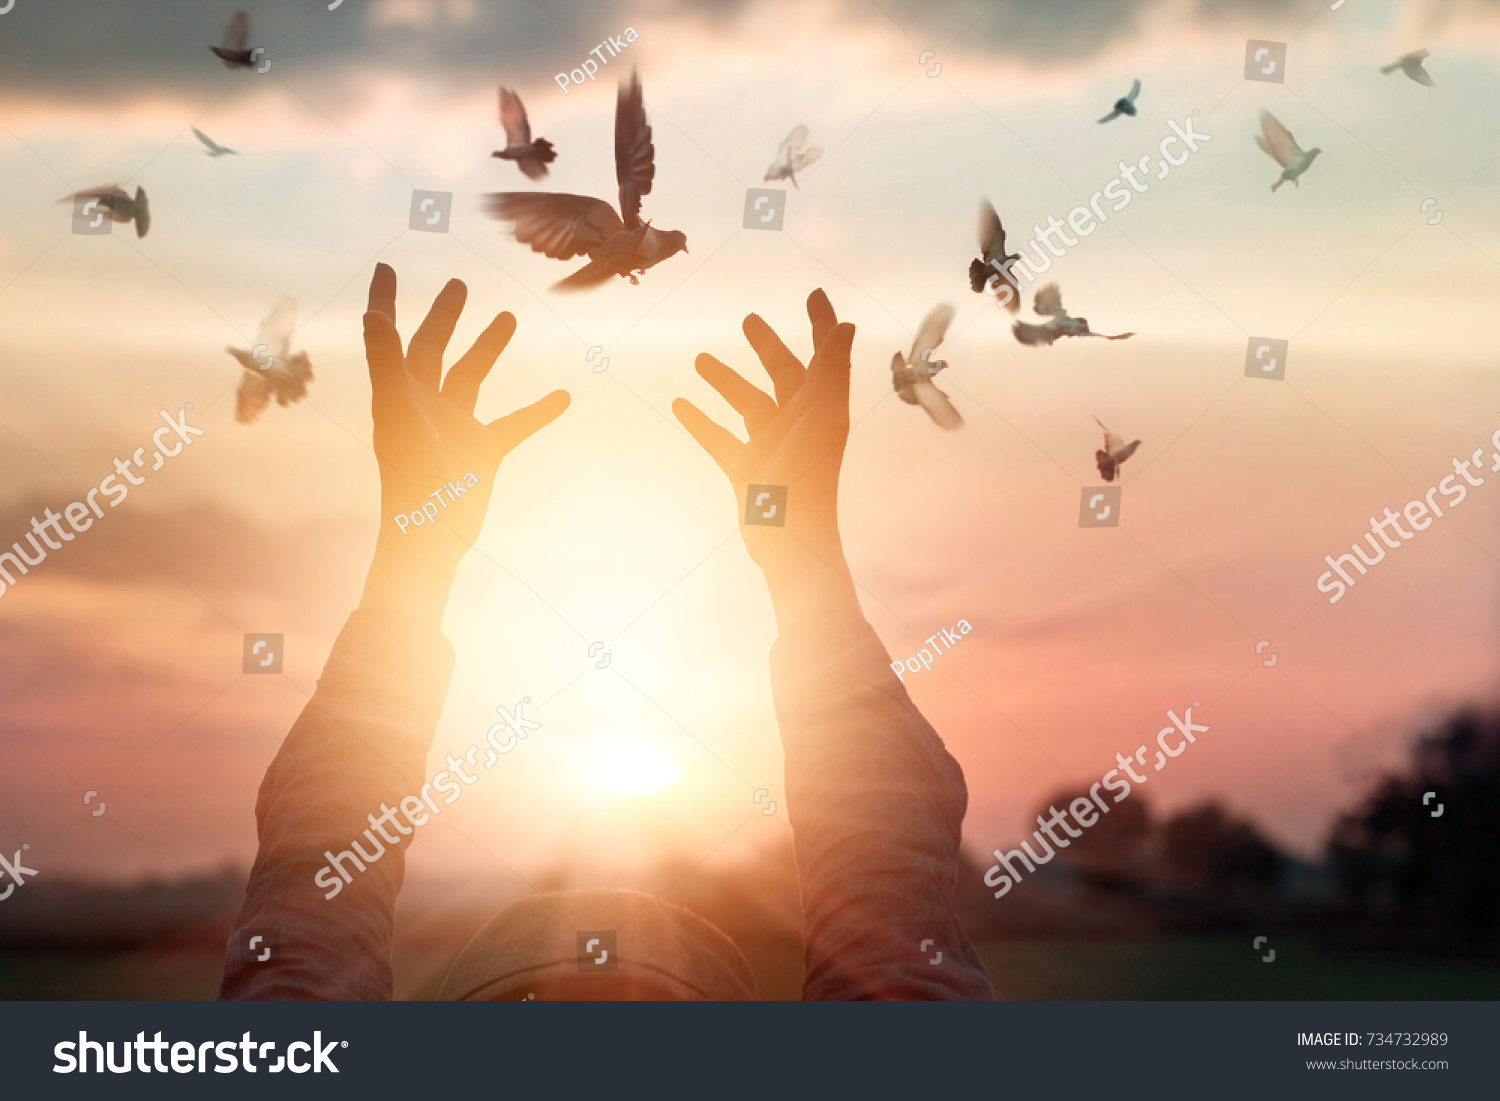 Woman praying and free bird enjoying nature on sunset background, hope concept  #734732989